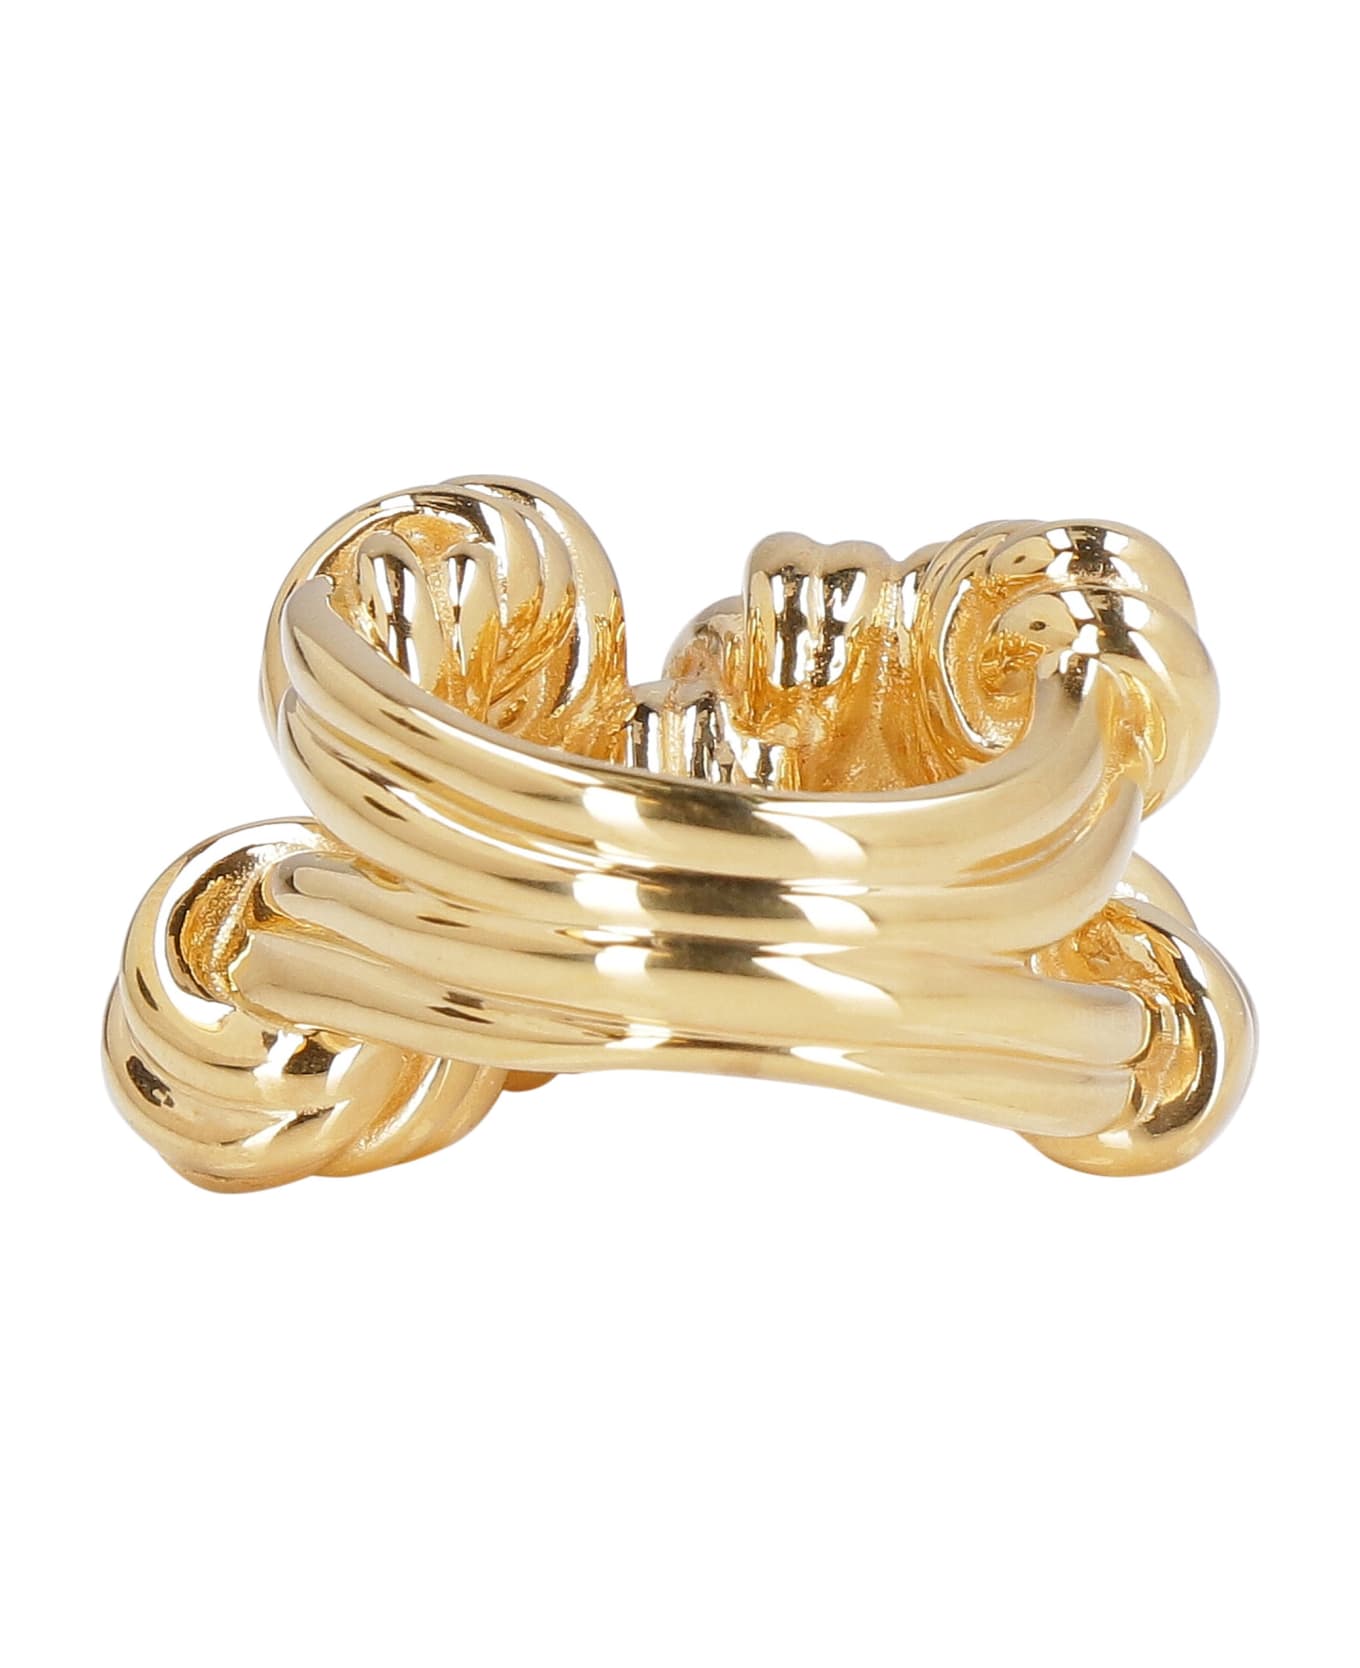 Bottega Veneta Knot Ring - Gold